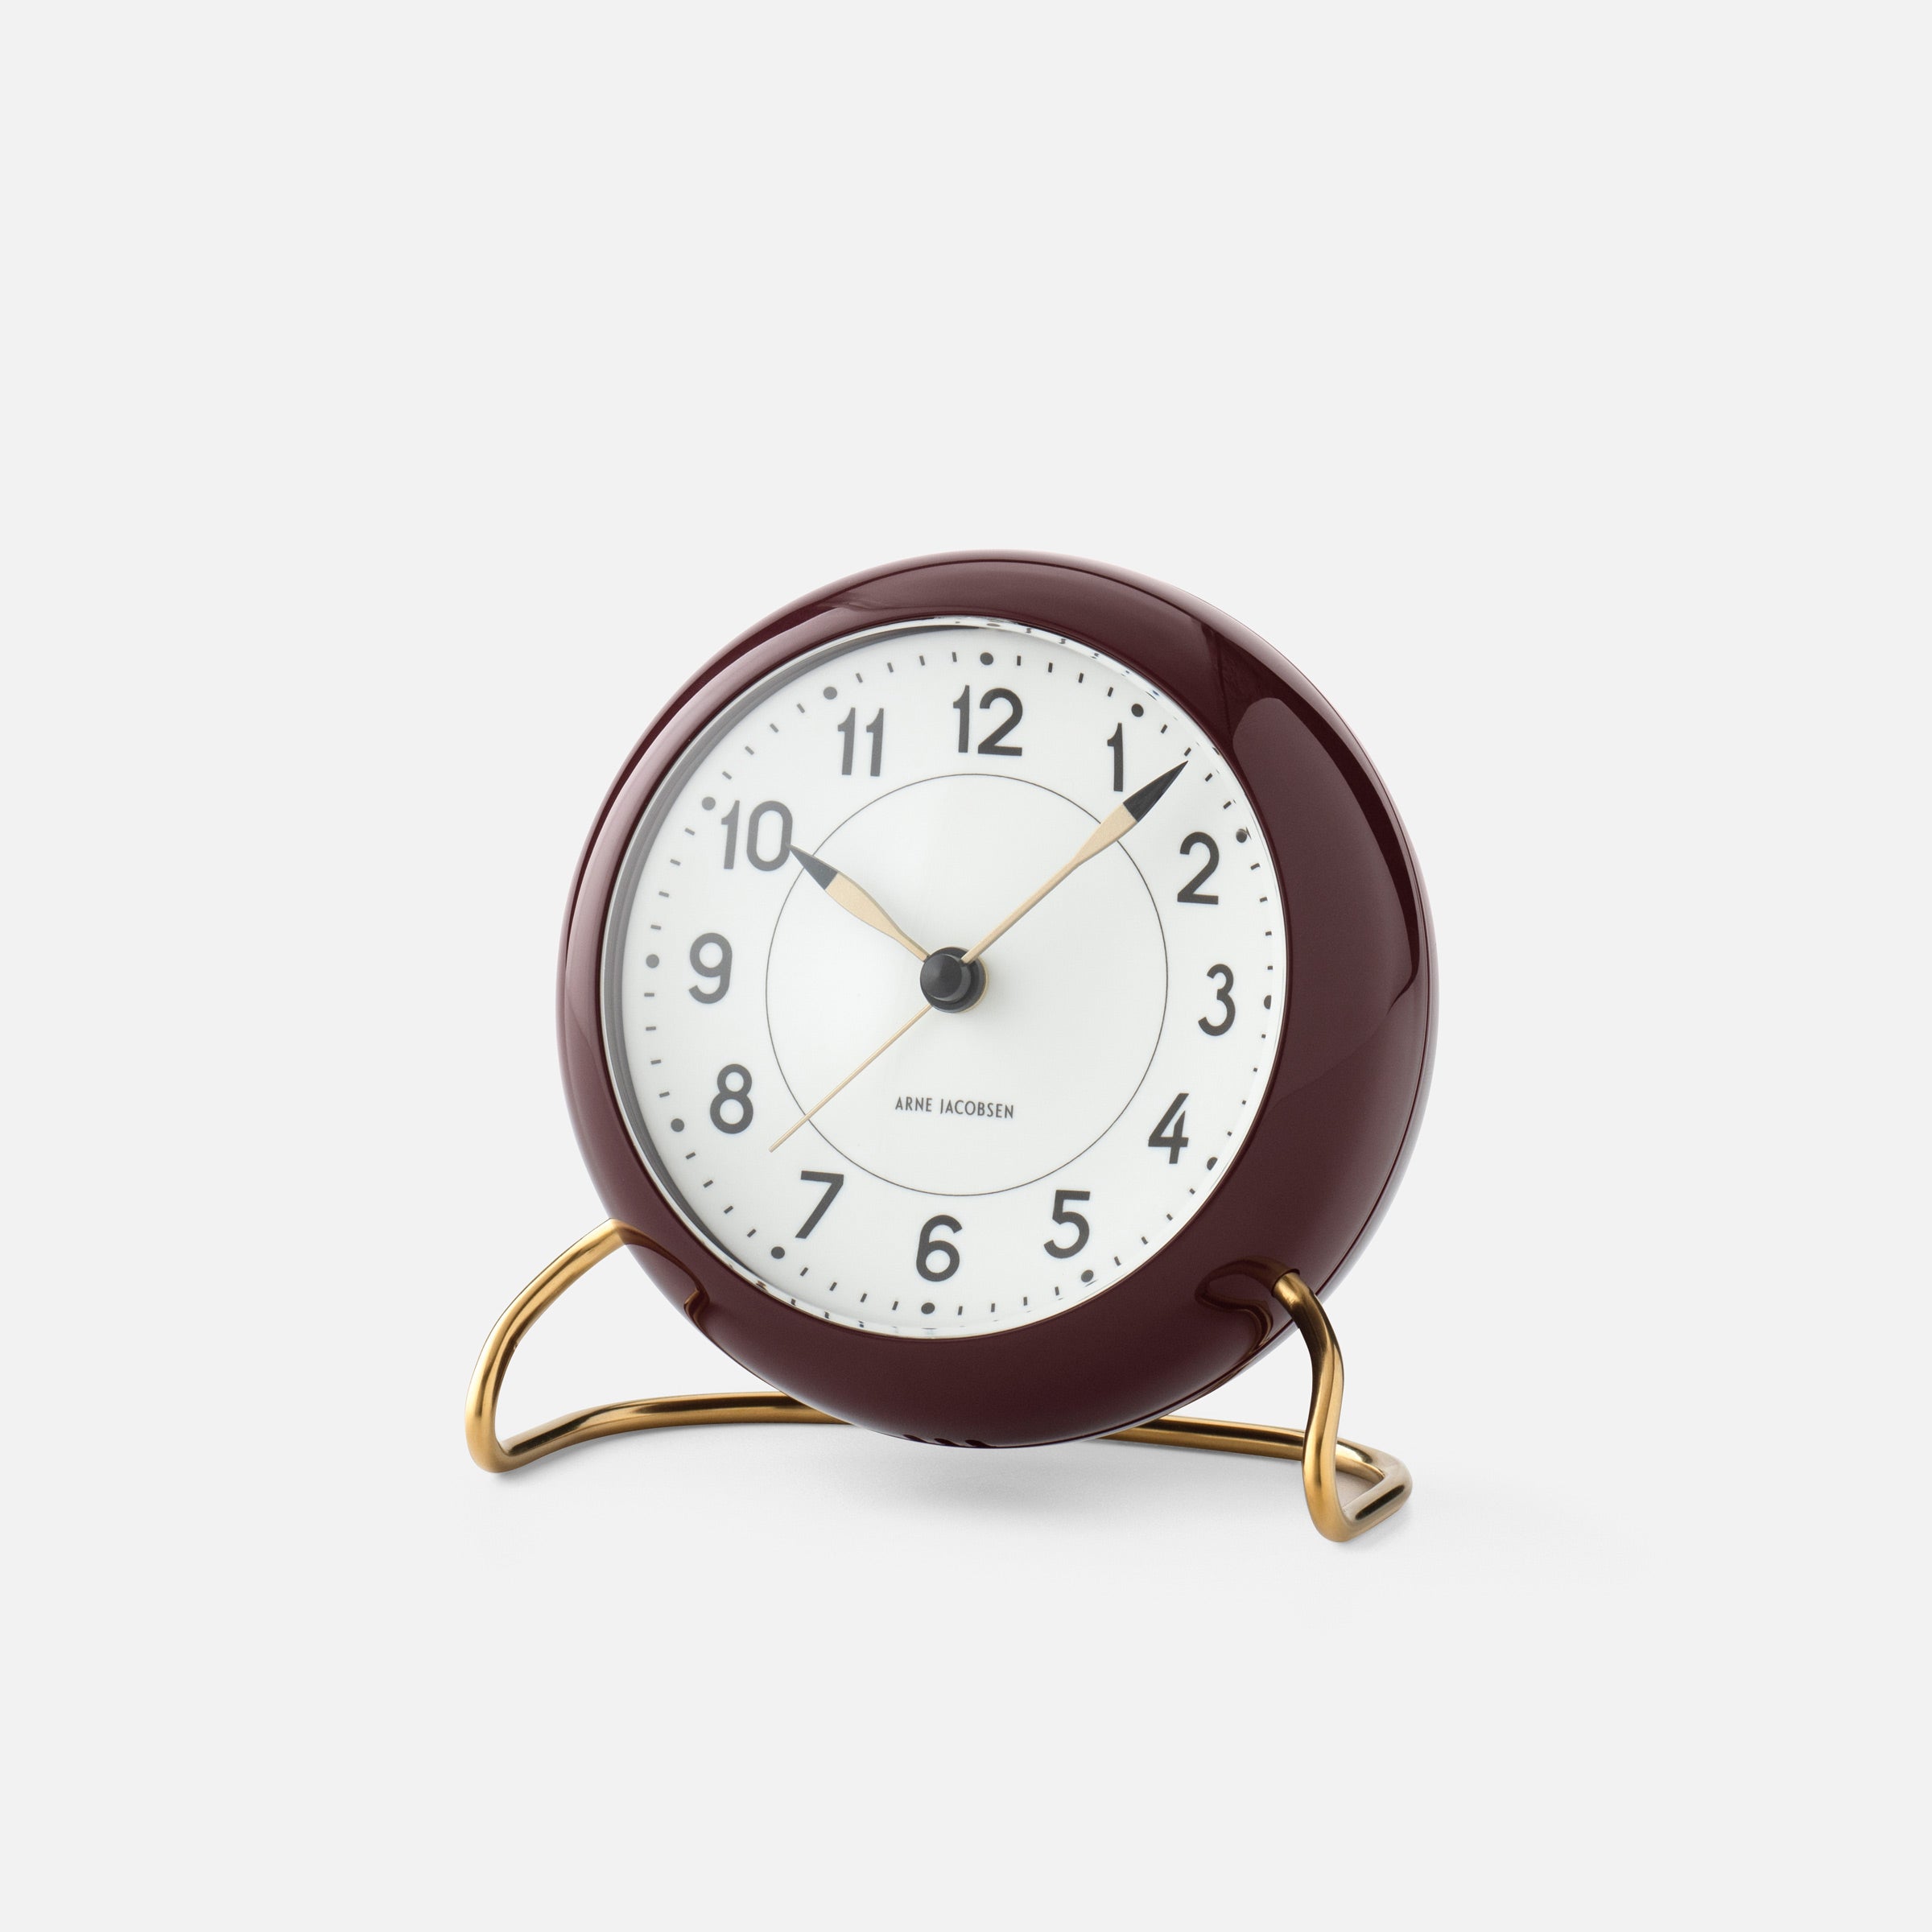 Burgundy Arne Jacobsen analog alarm clock with brass stand.